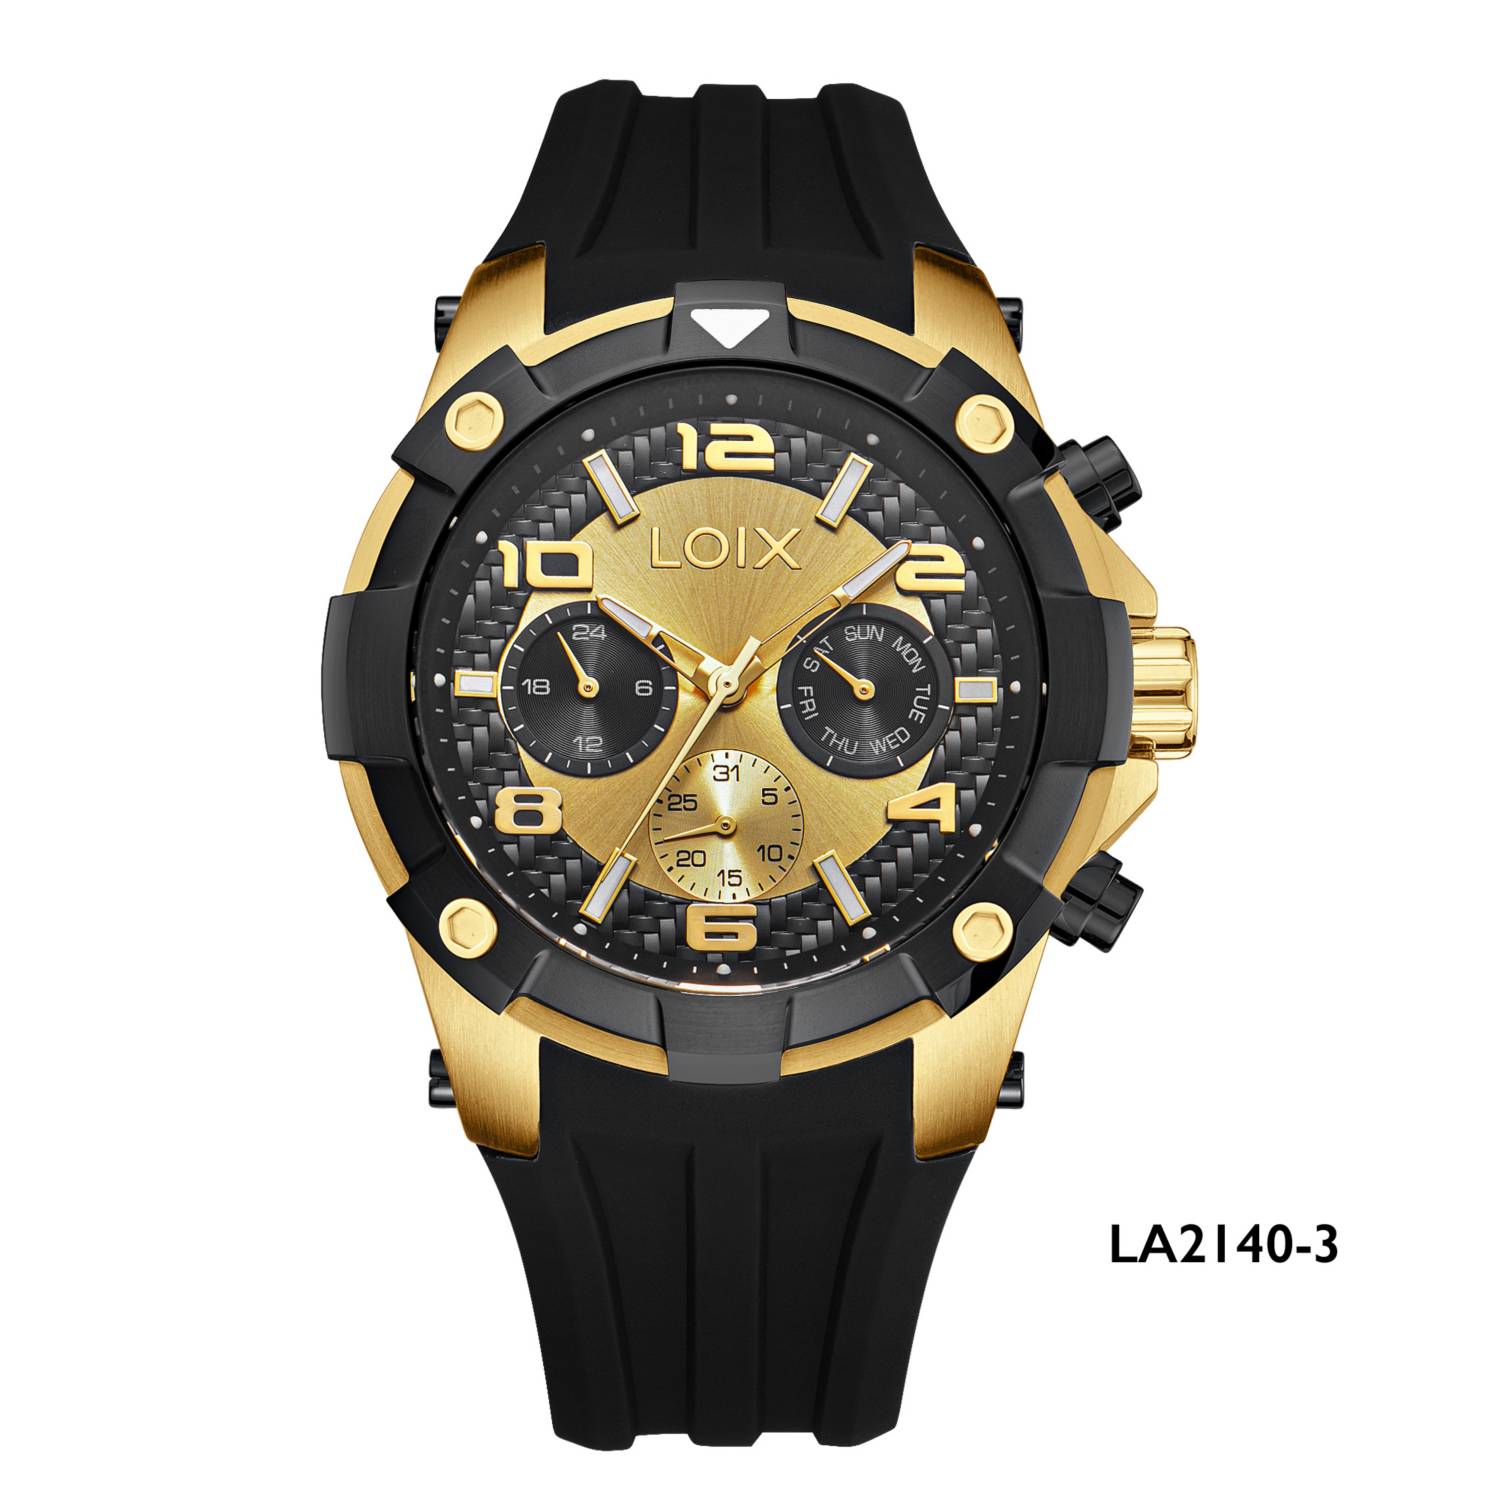 Reloj hombre LA2143-2 dorado con tablero plateado